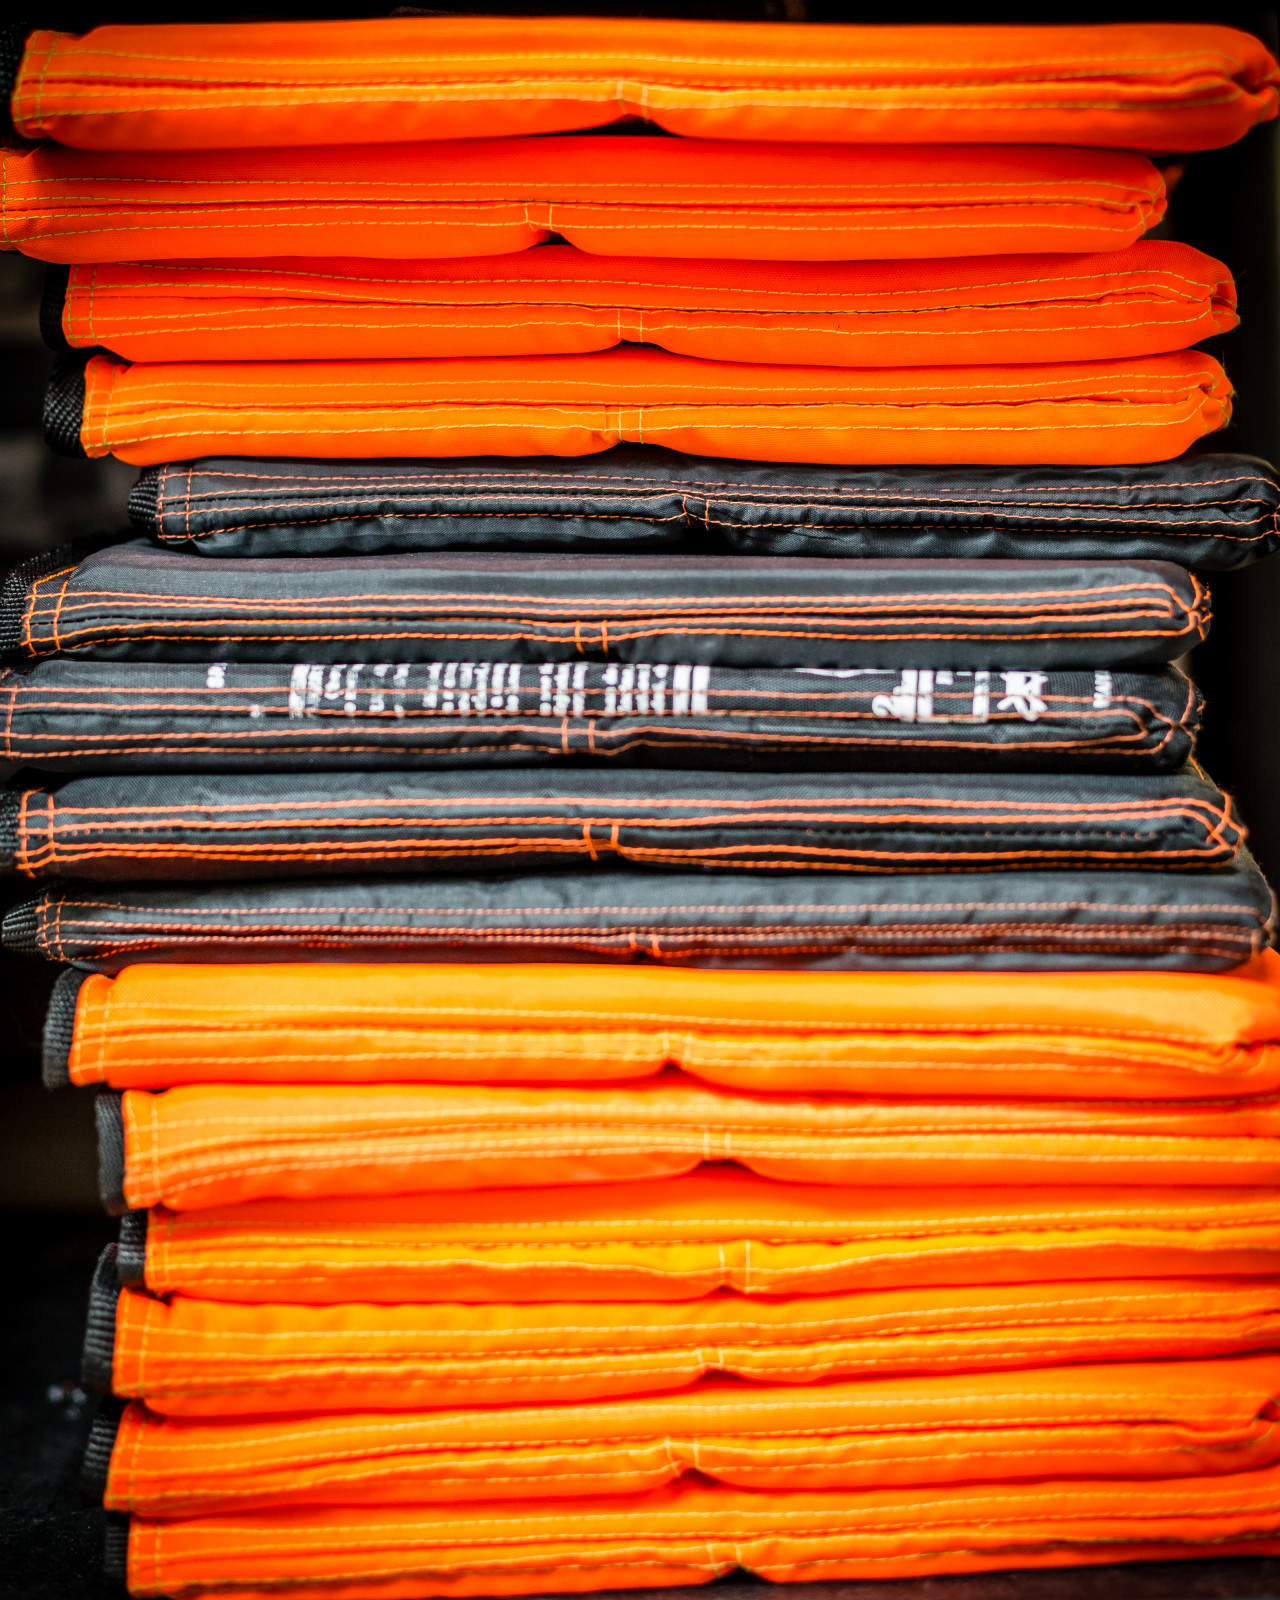 Stacks of orange and black shirts